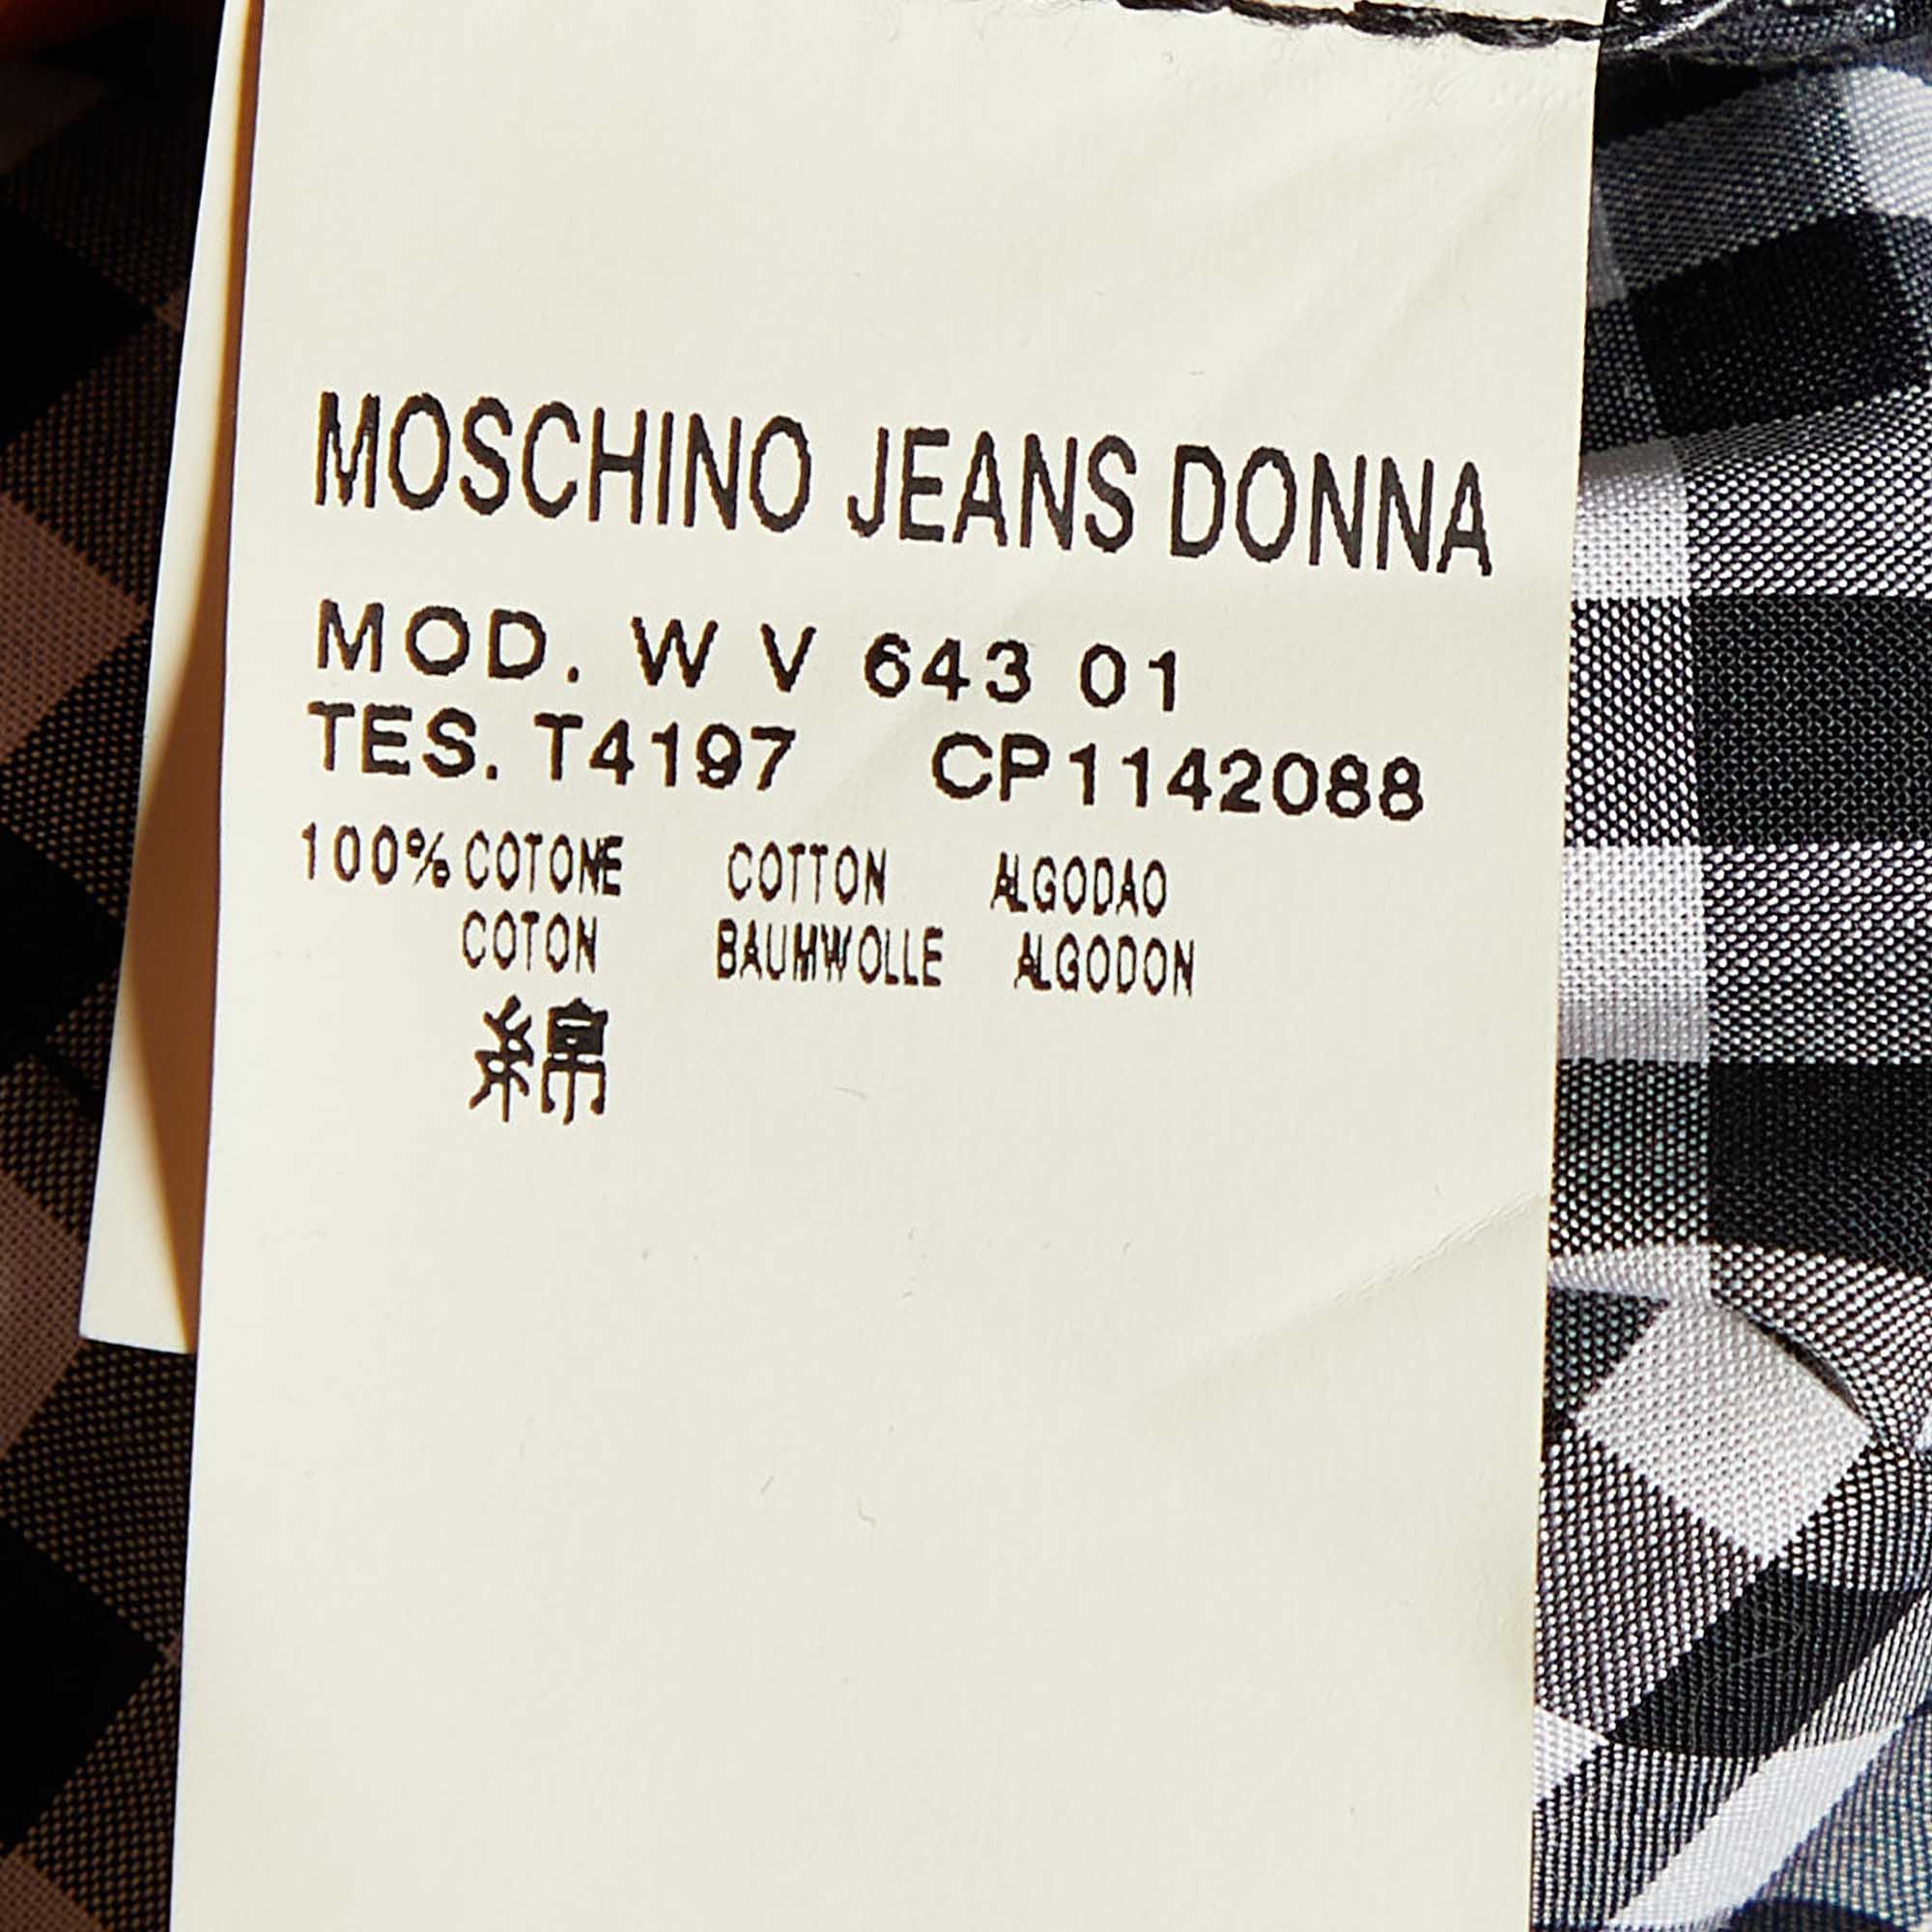 Moschino Jeans Monochrome Gingham Check Cotton Dress L